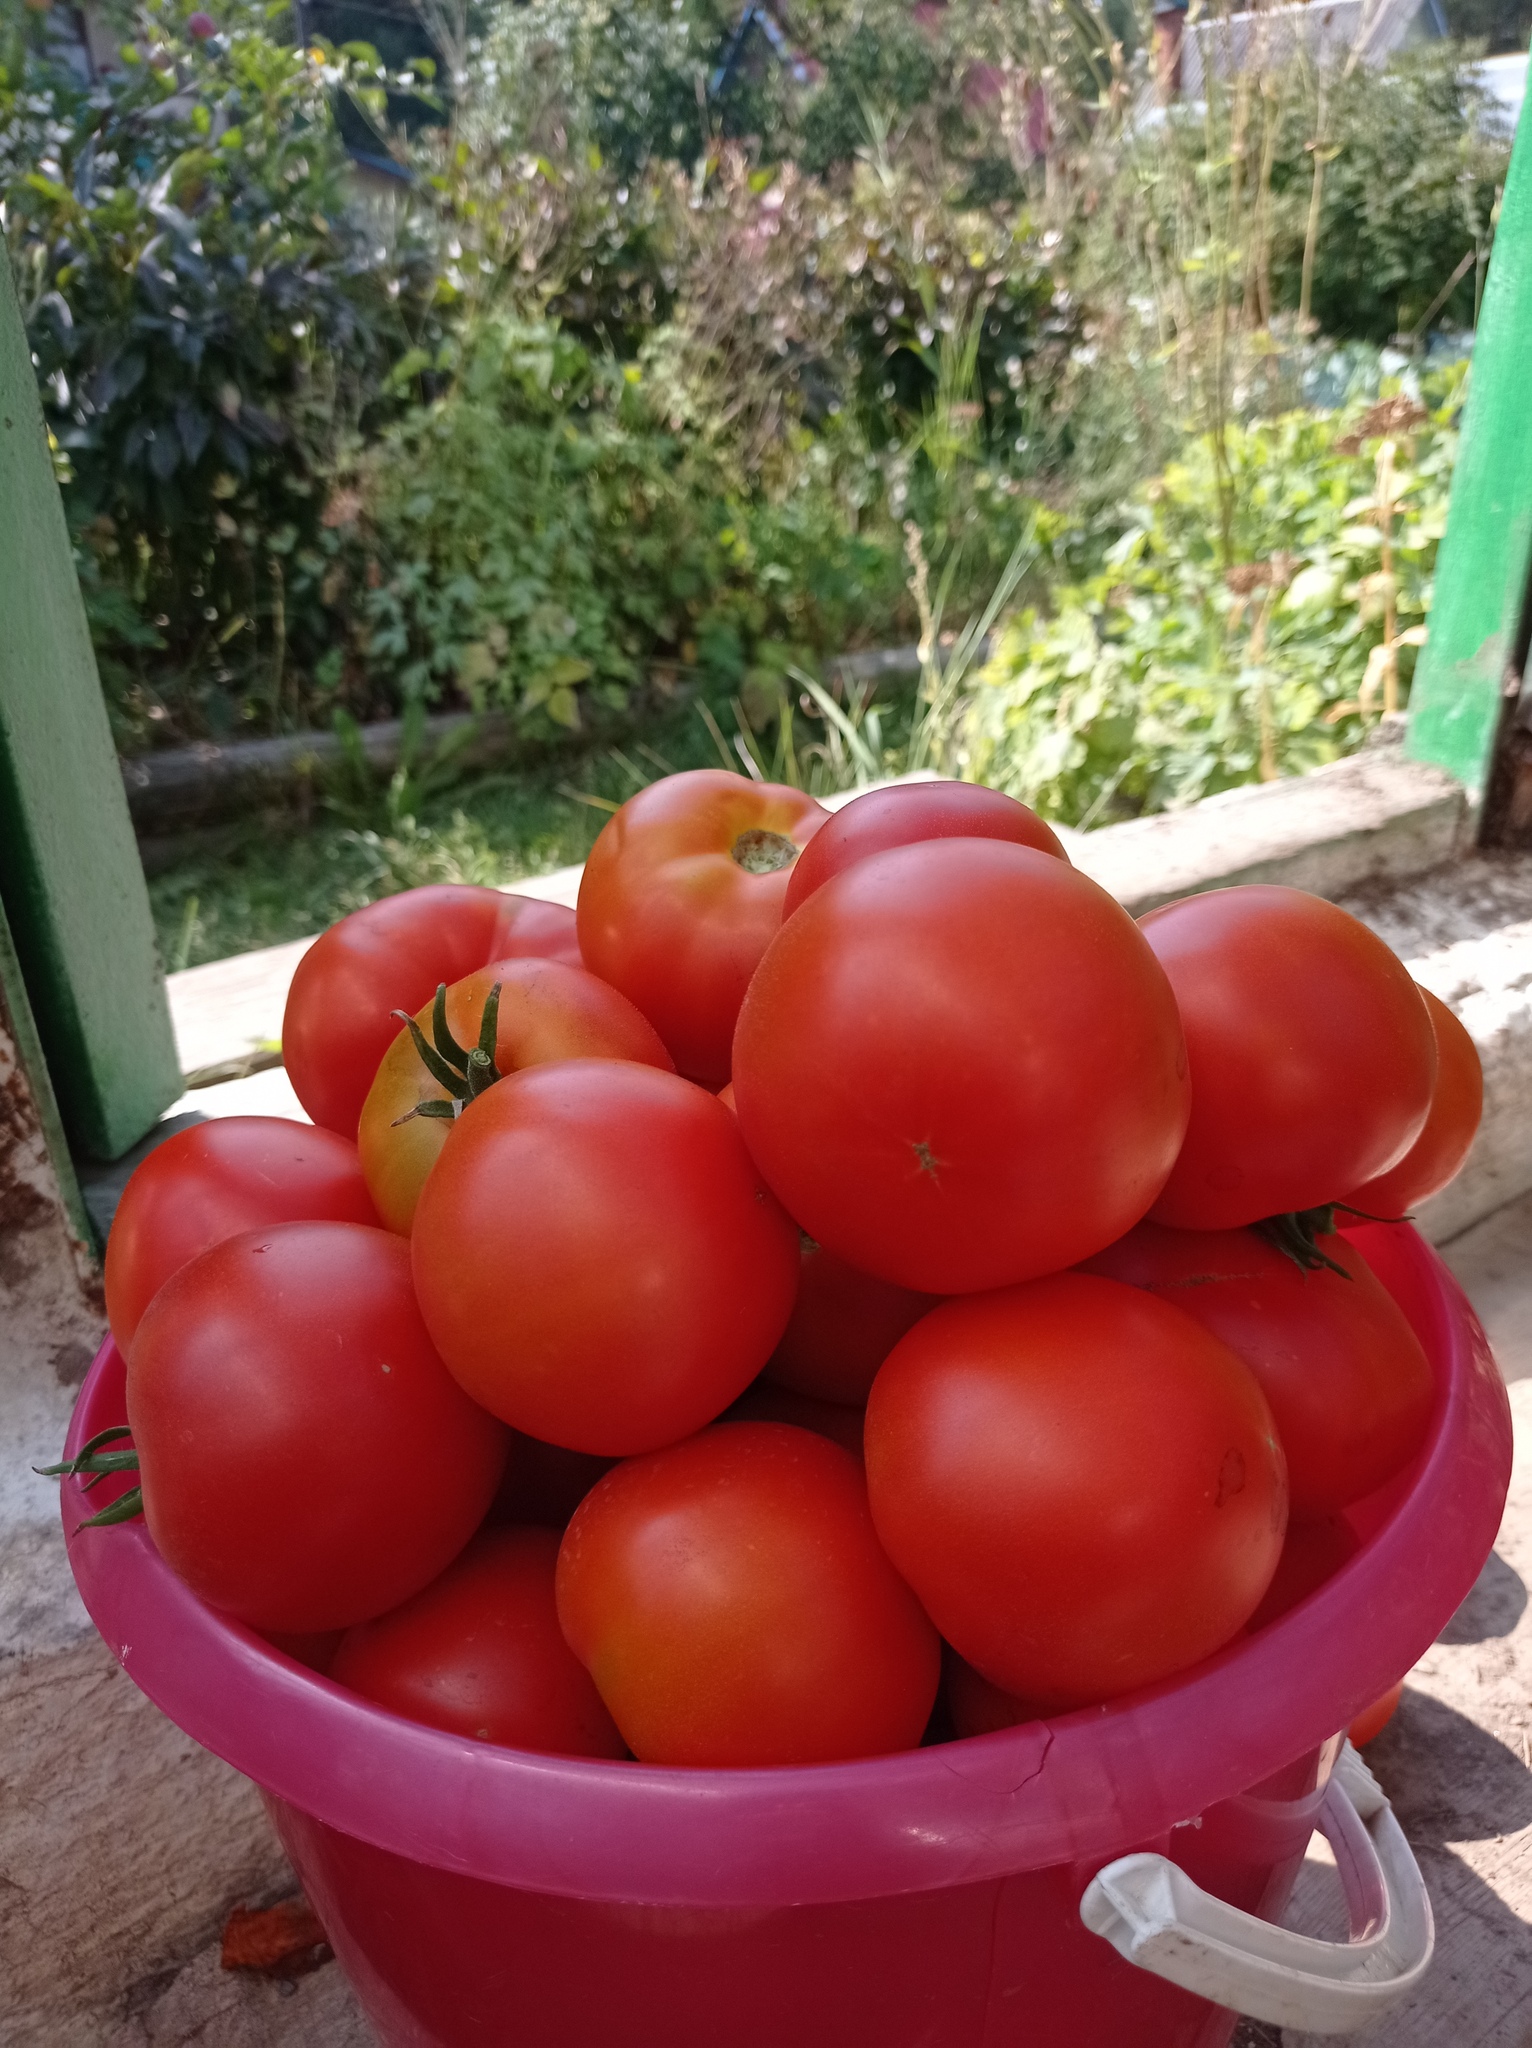 200 кг помидор. Килограмм помидоров. Томаты 1 кг. Килограммовый помидор. Стоимость помидоров за кг.